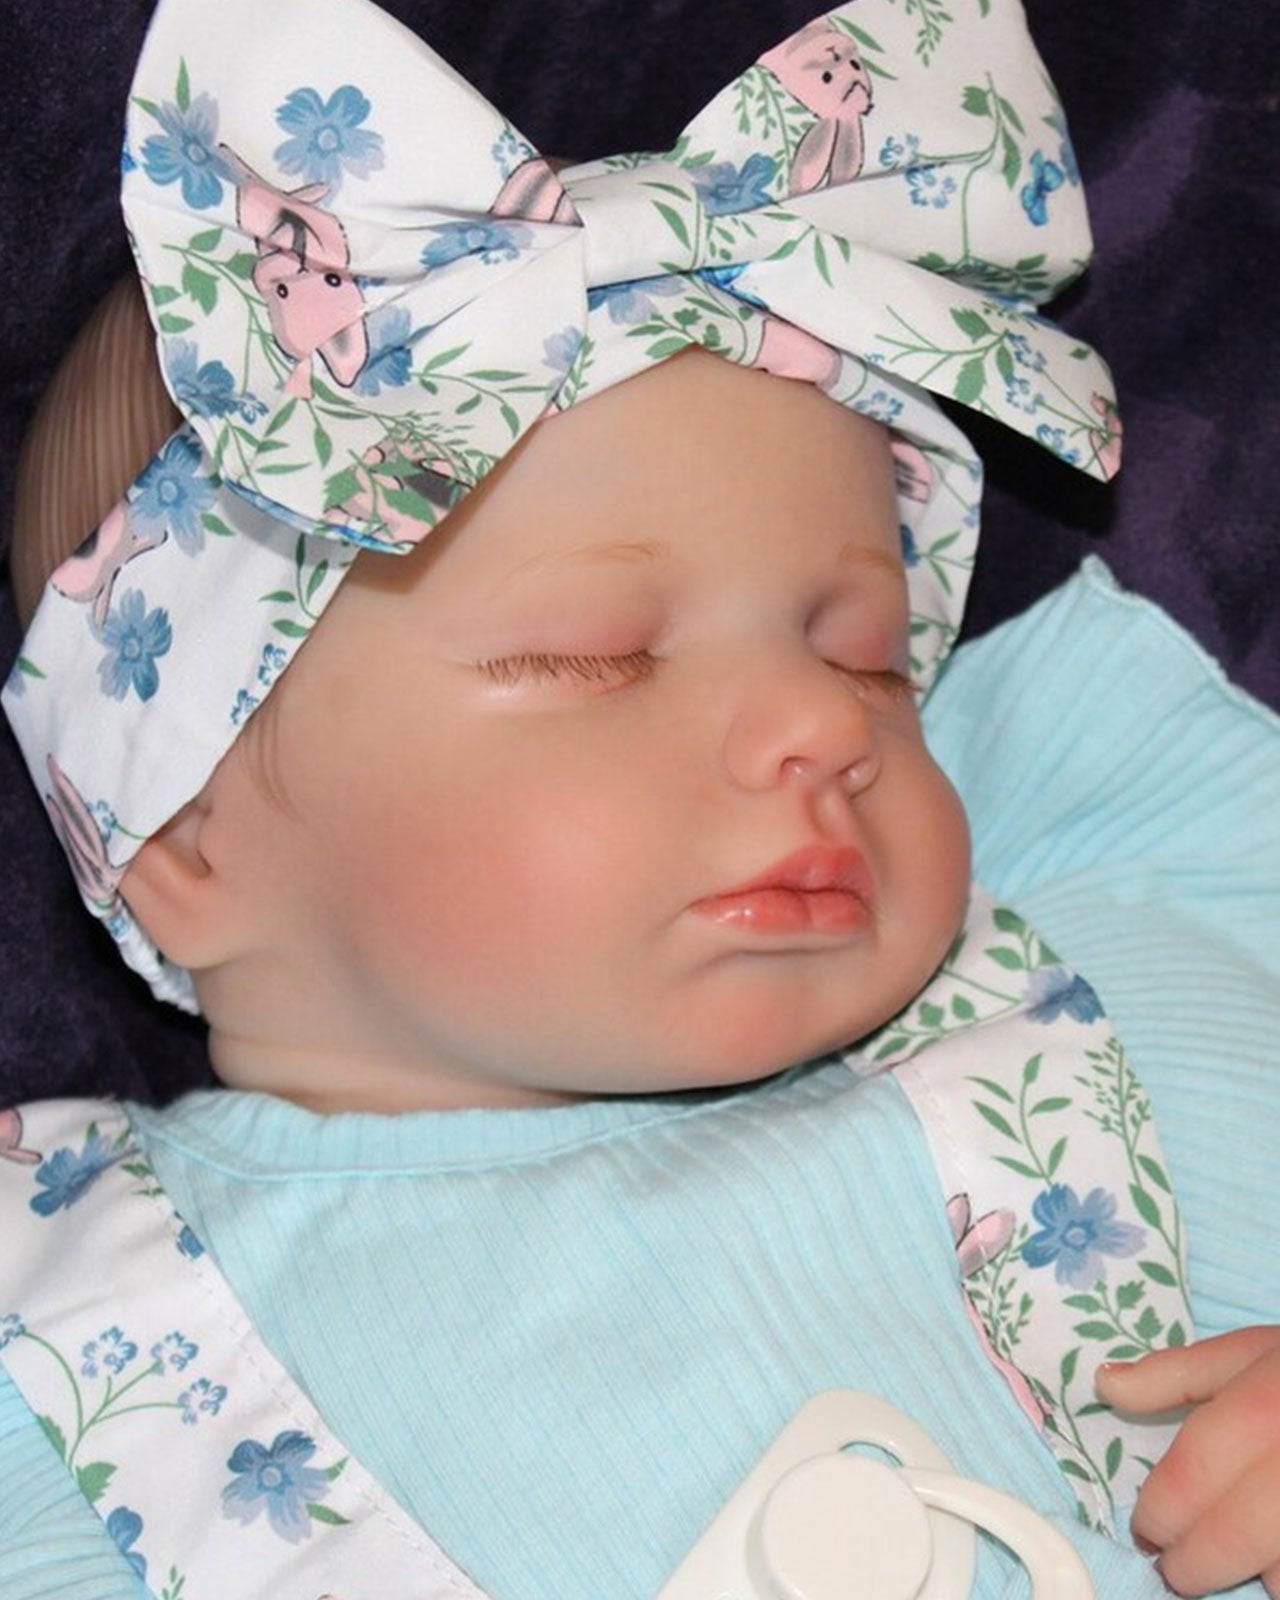 Luna - 20" Reborn Baby Dolls Lovely Sleeping Newborn Girl with Hand-painted Hair